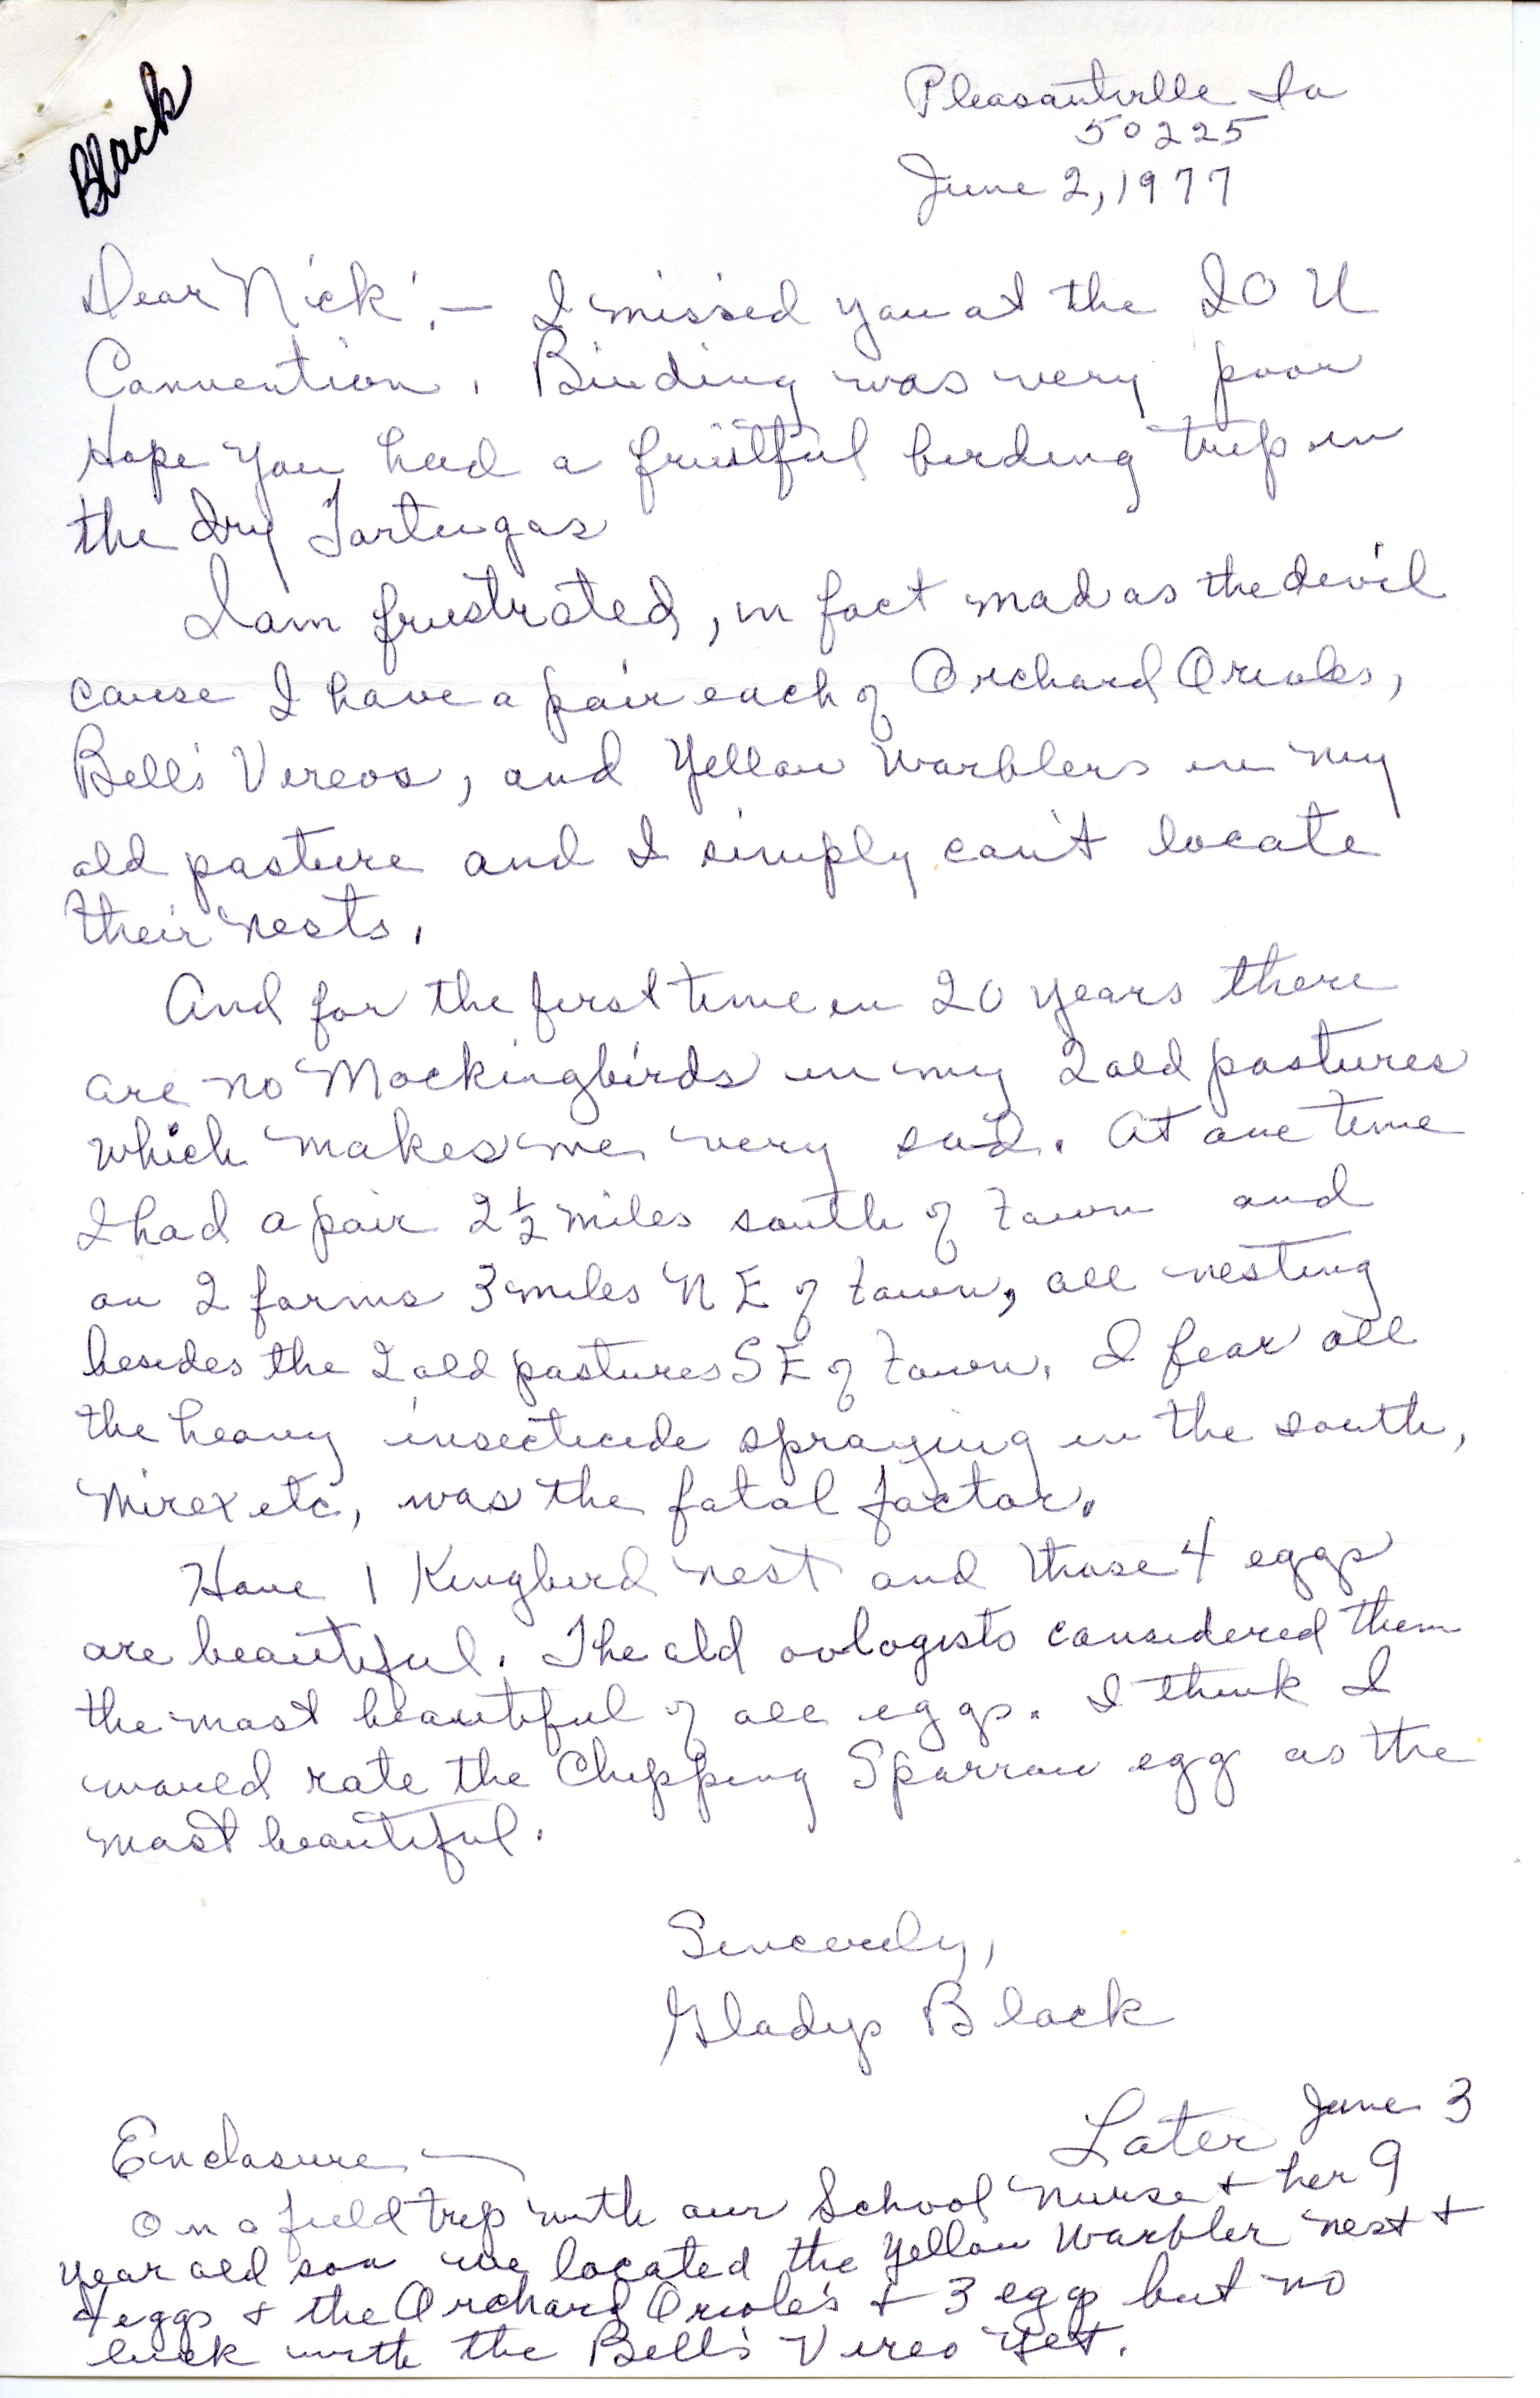 Gladys Black letter to Nicholas S. Halmi regarding bird sightings, June 2, 1977